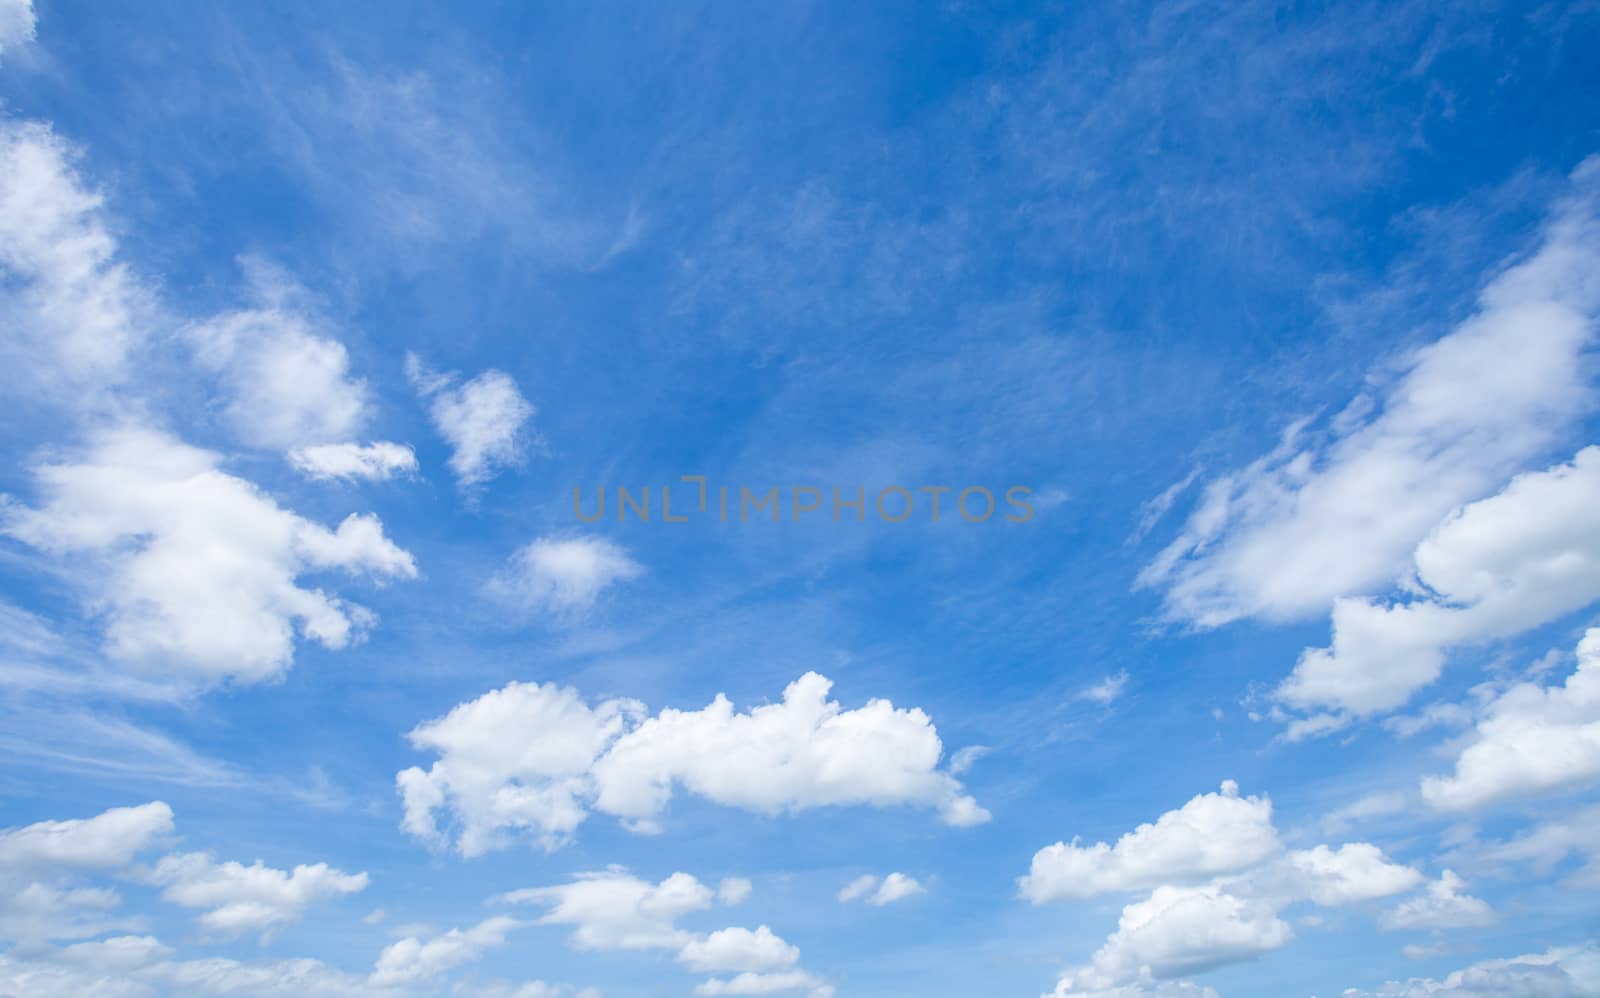 blue sky with cloud by antpkr